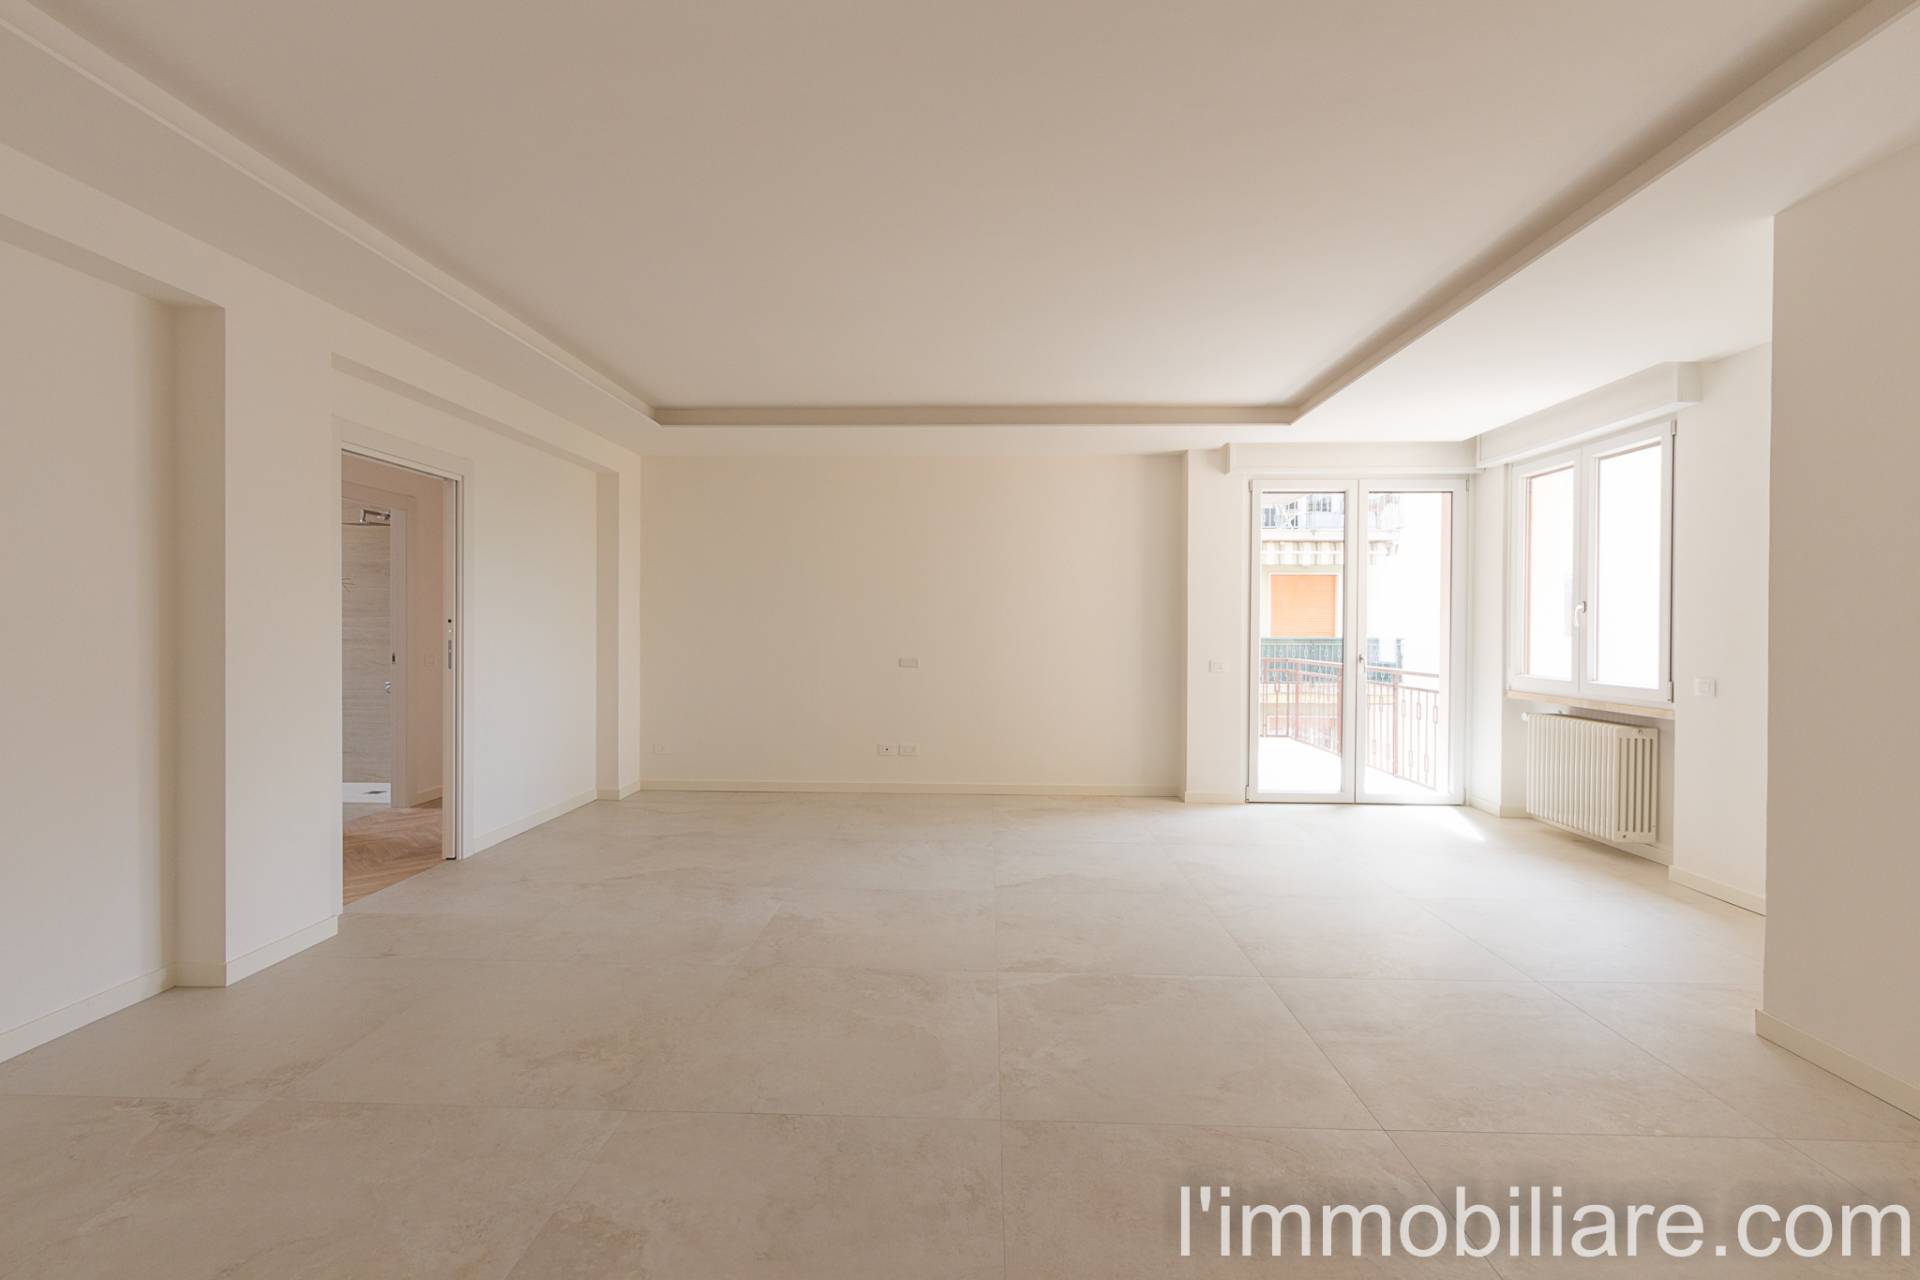 Appartamento in vendita a Ponte Crencano, Verona (VR)